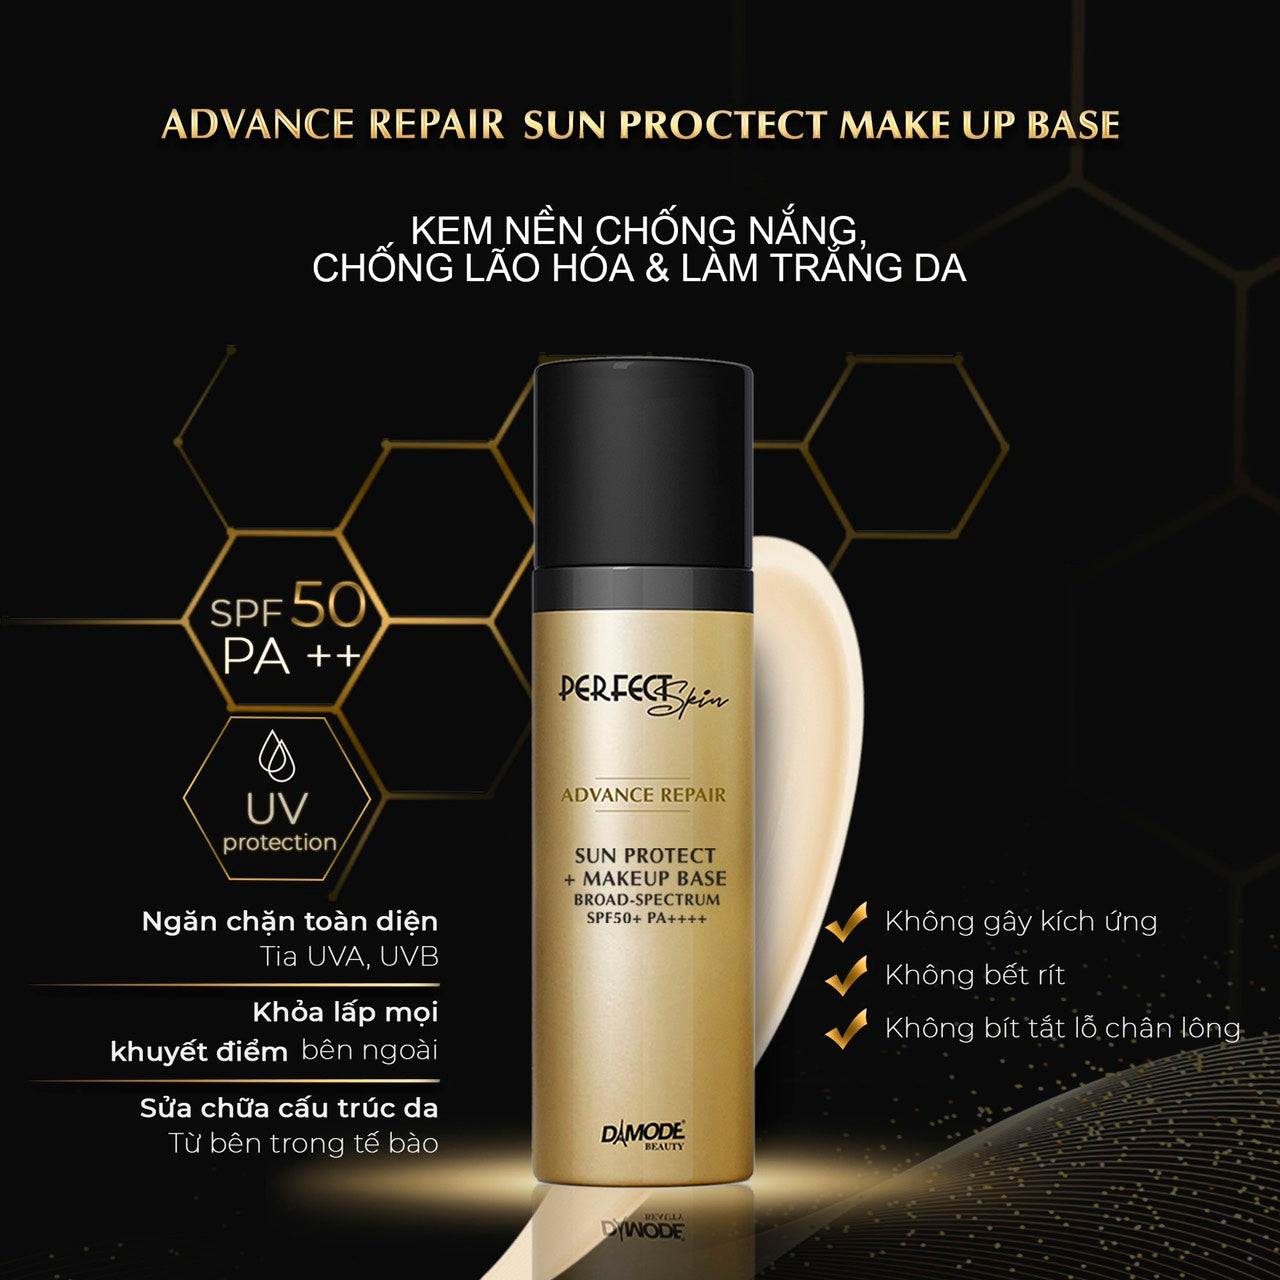 DAMODE Perfect Skin Advance Repair Sun Protect + Makeup Base Broad Spectrum SPF50+ PA++++ - 30ml